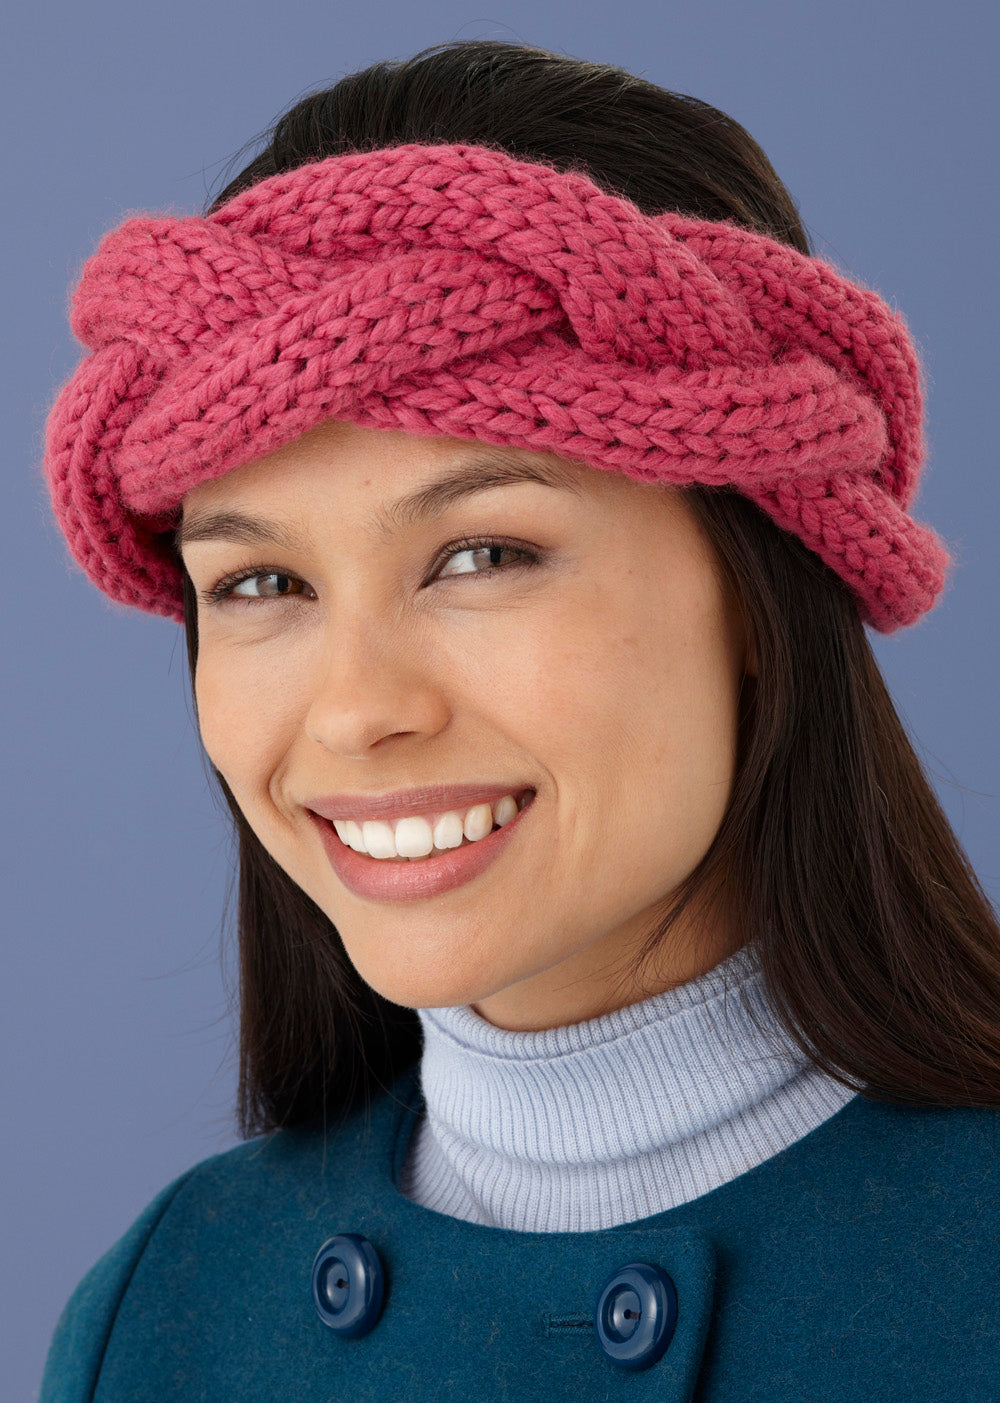 Beginner's Braided Headband (Knit) – Lion Brand Yarn